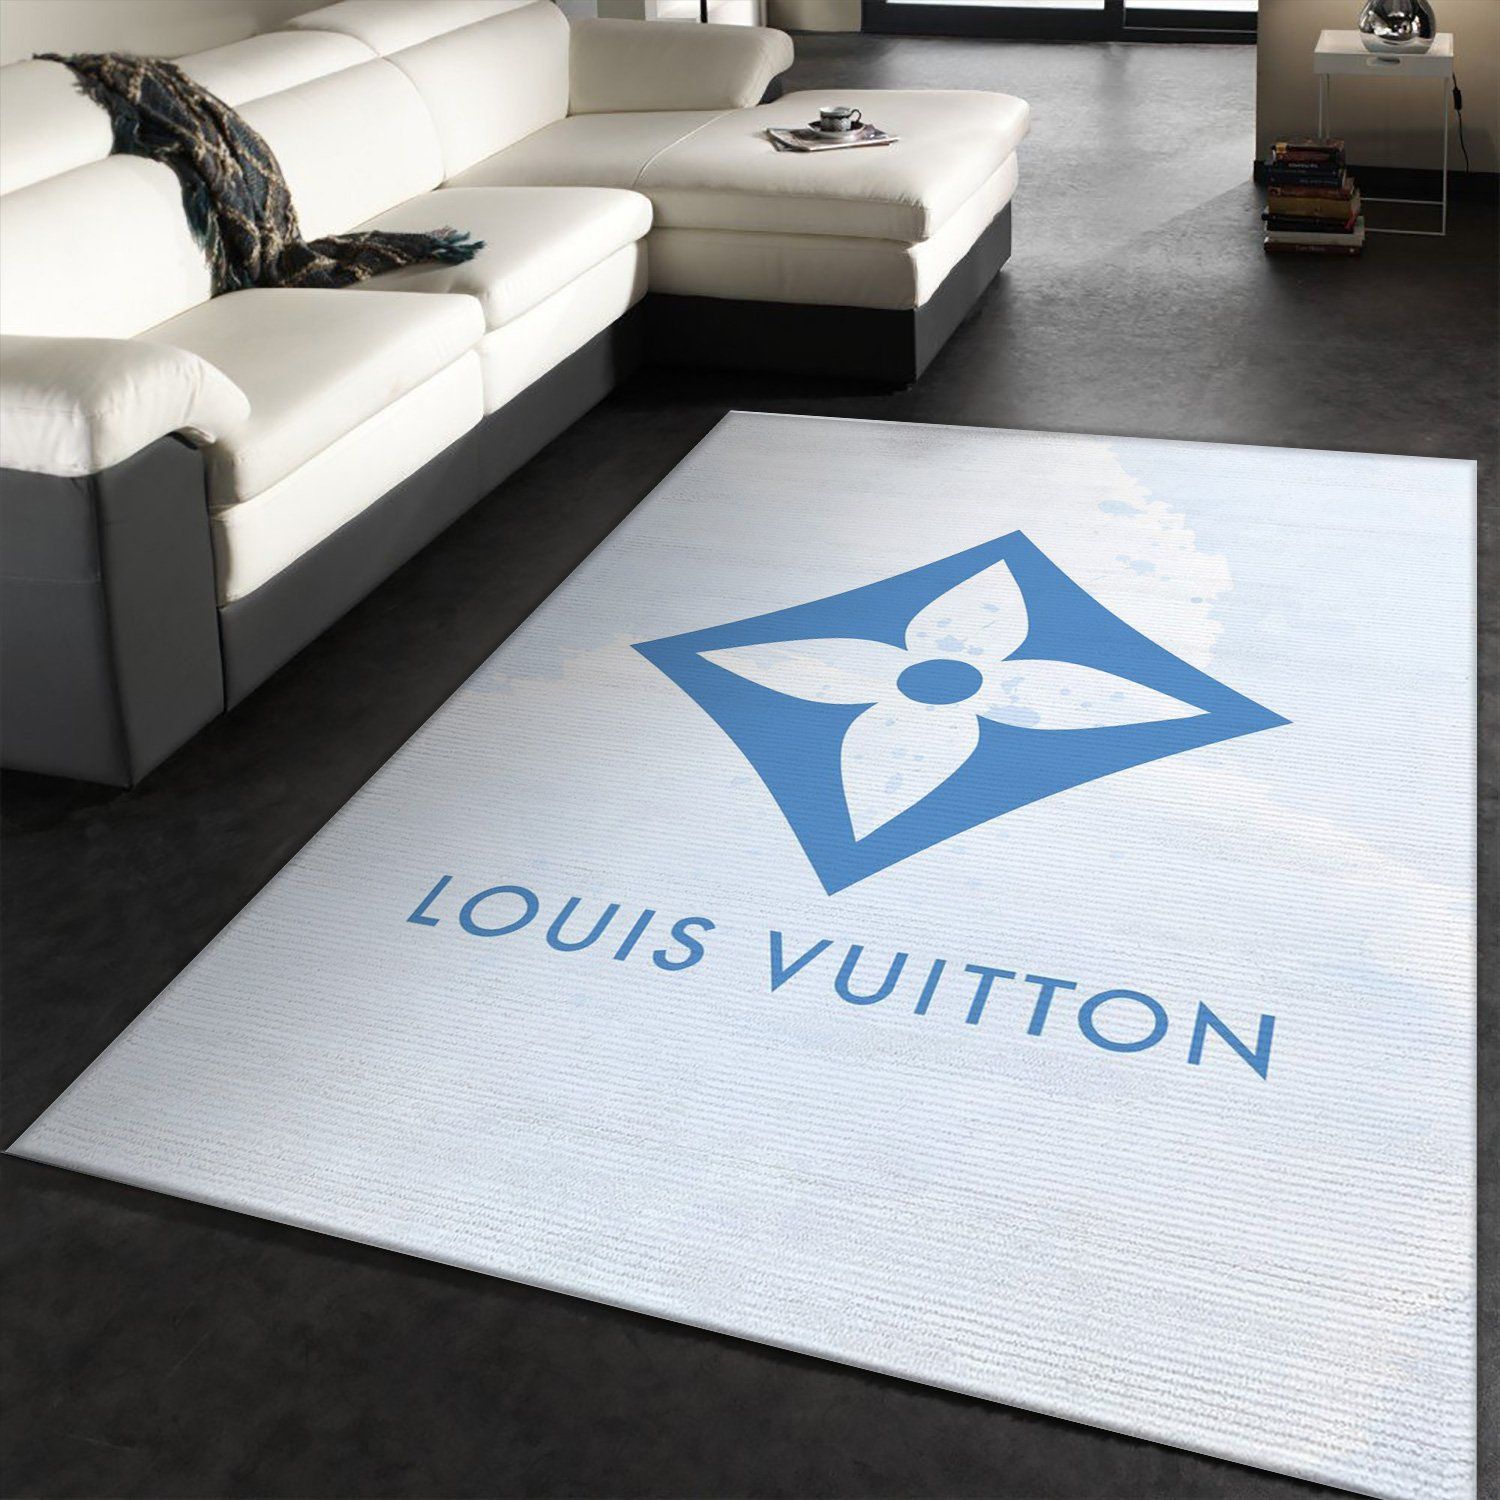 Louis Vuitton Area Rugs Bedroom Rug Floor Decor Home Decor